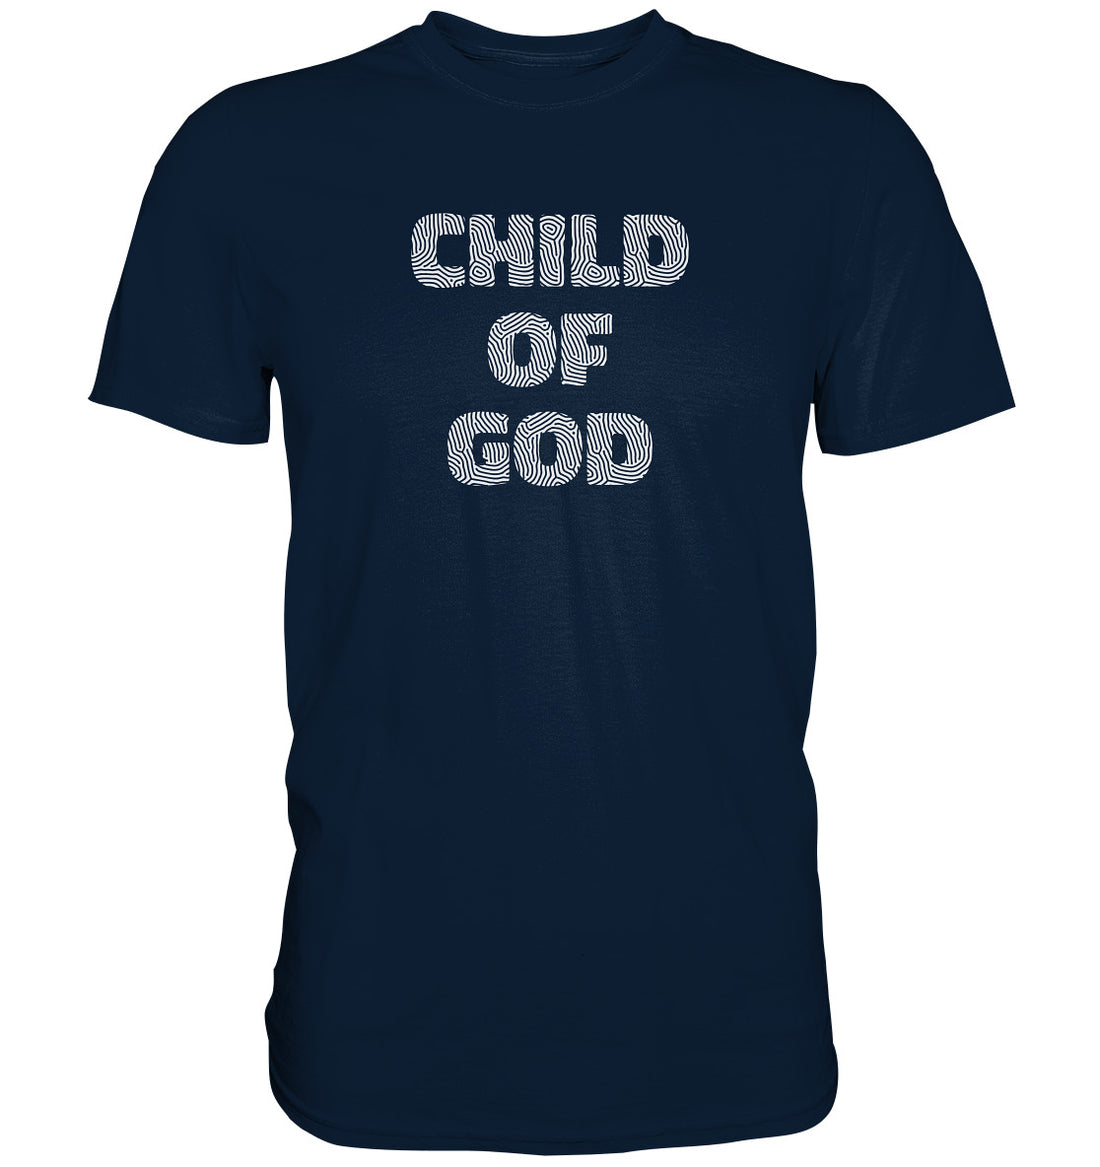 Joh 1,12 - Child of God - Fingerprint Weiß - Premium Shirt